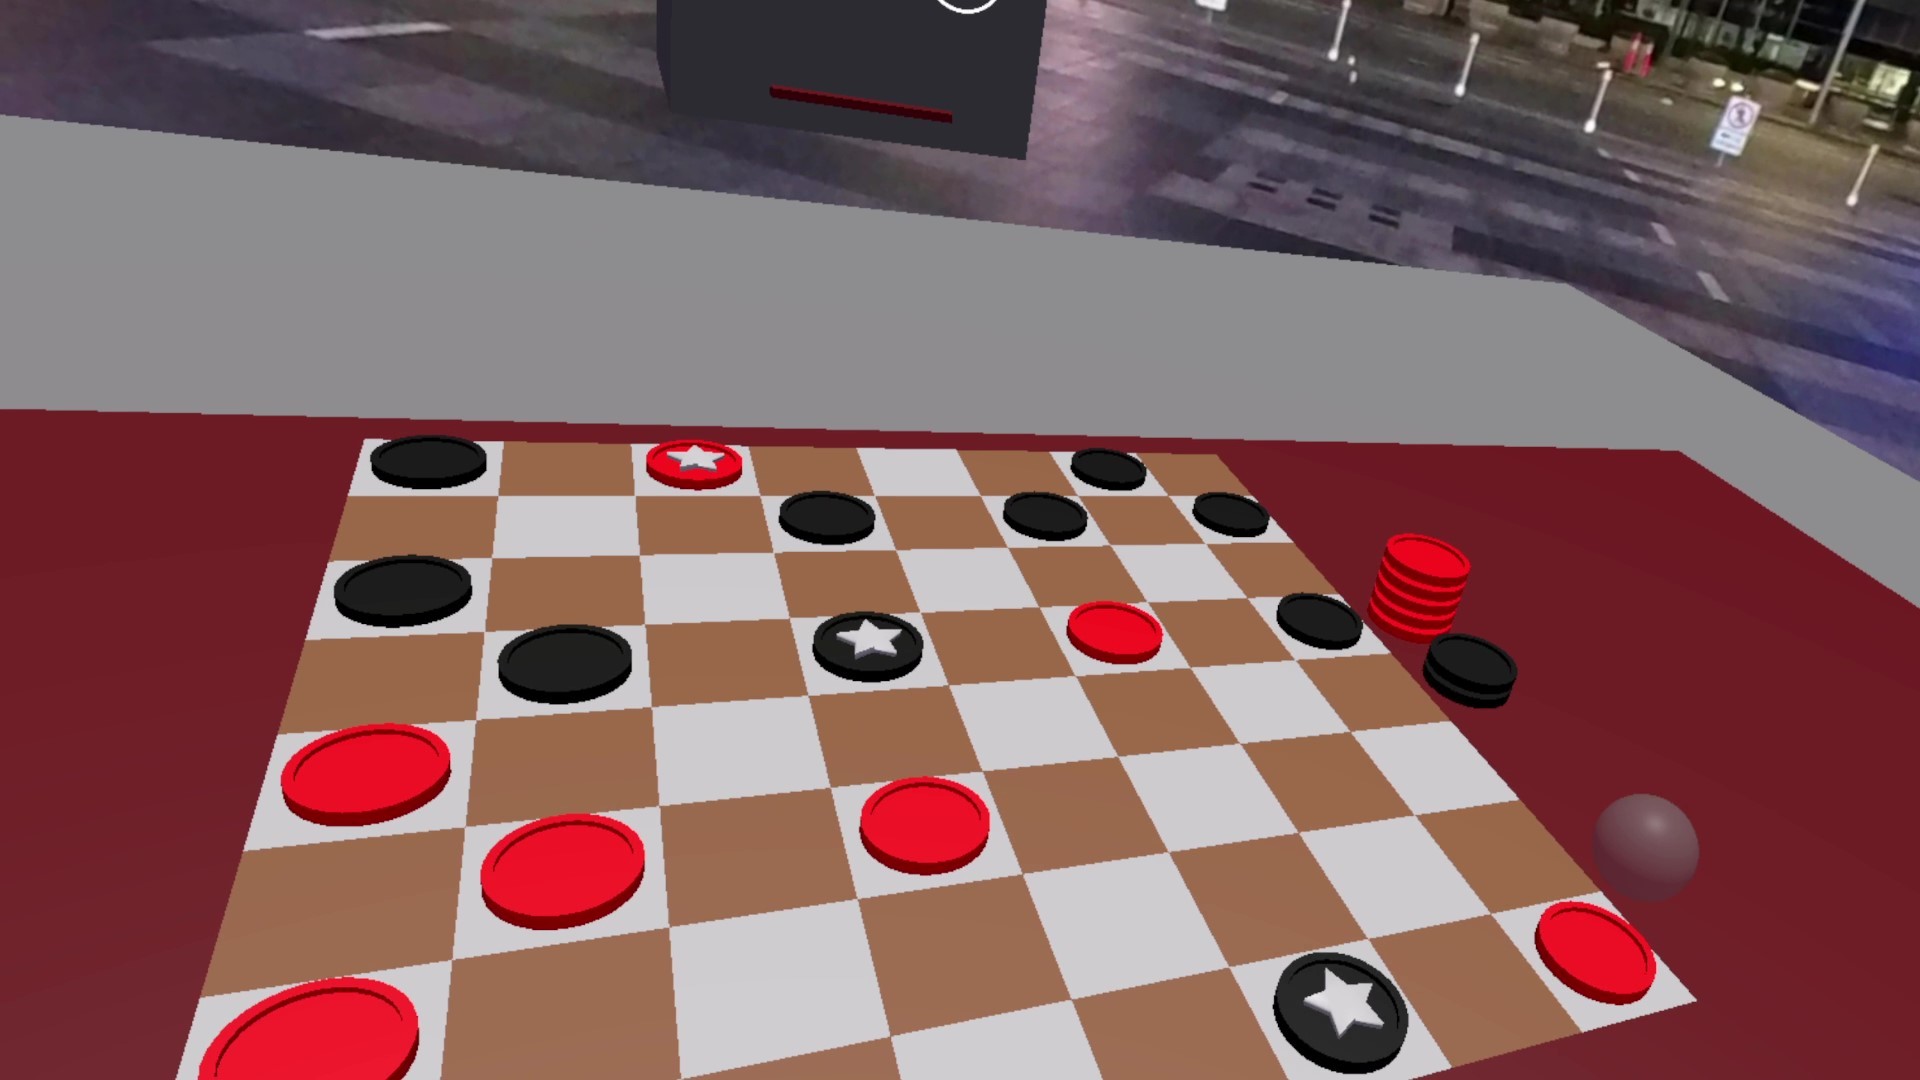 4d chess play